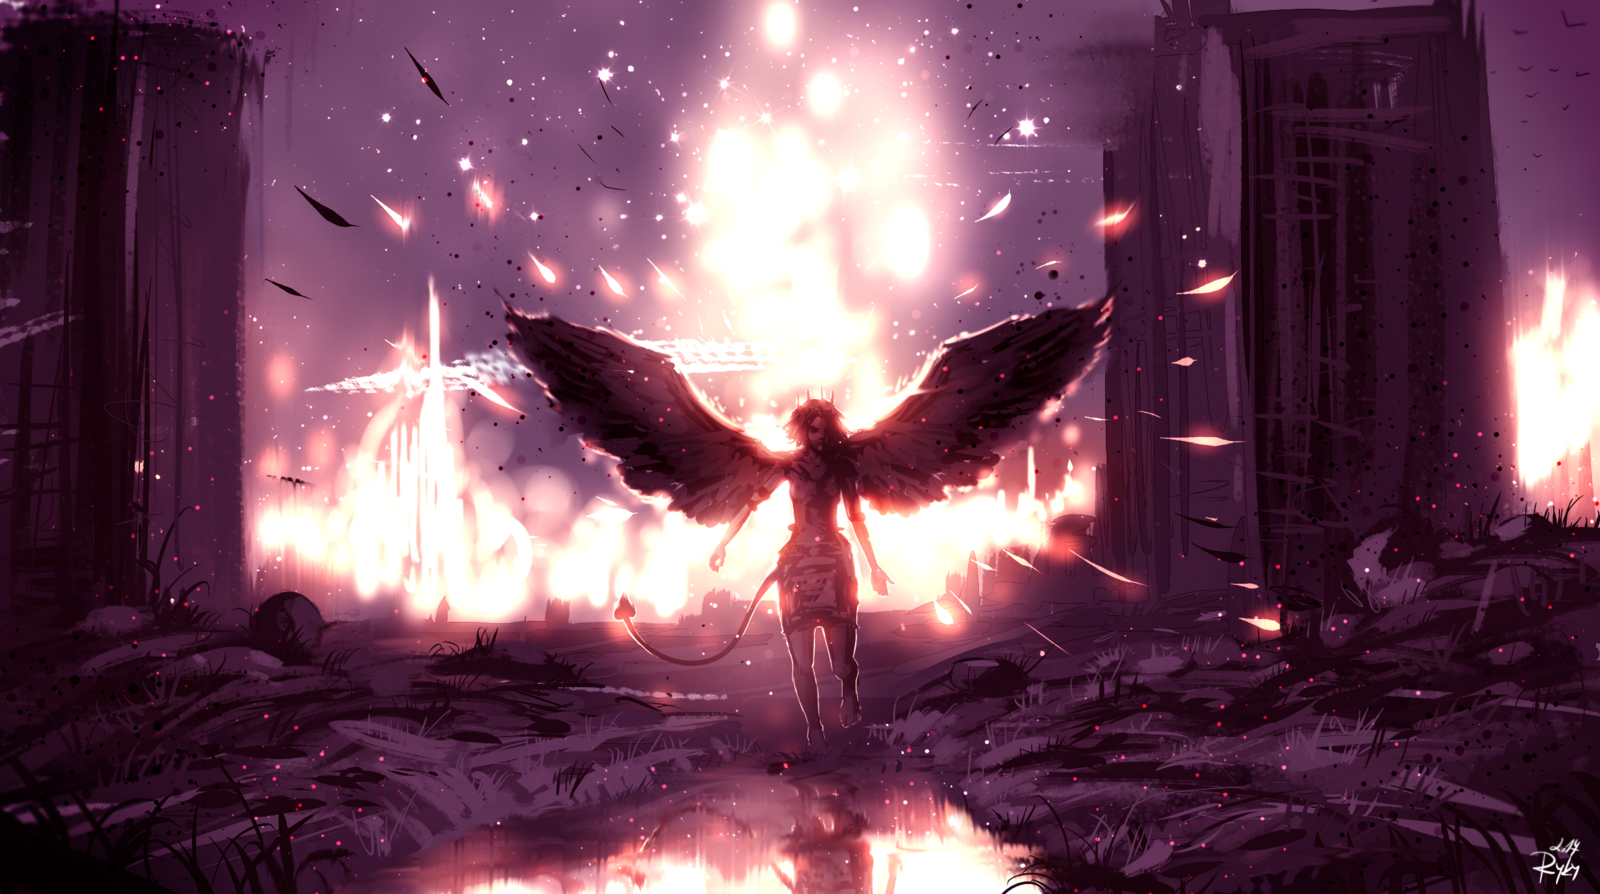 Wallpapers digital art art of fantasy wings on the desktop